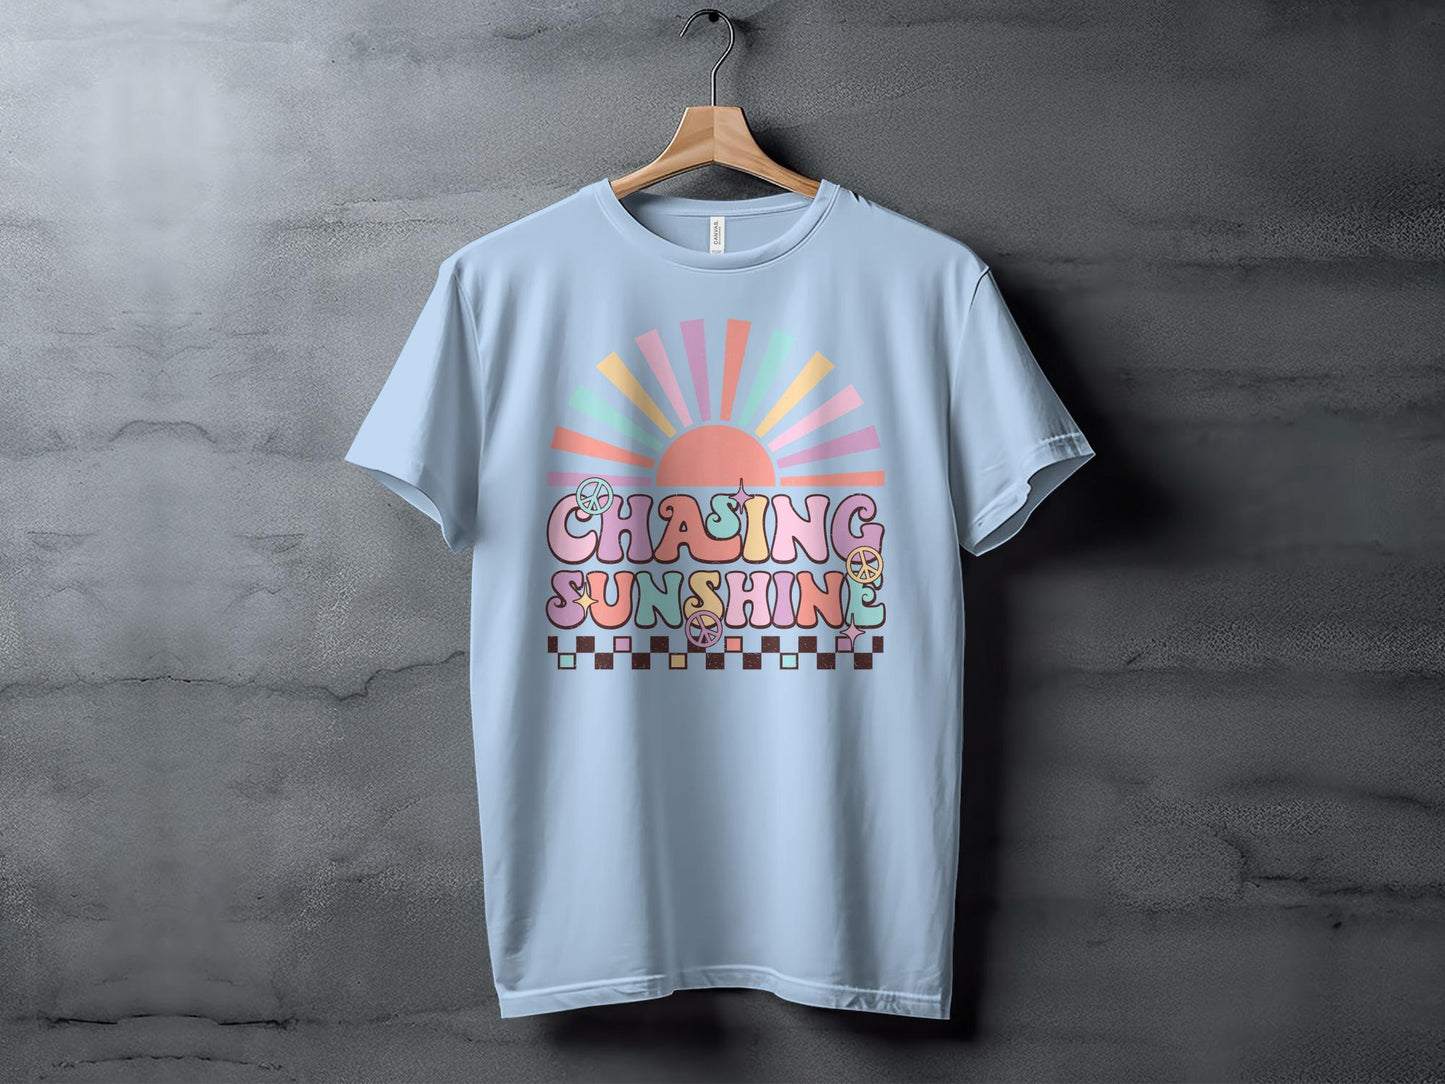 Retro Chasing Sunshine Graphic Tee, Vintage Inspired Sunset Design, Casual Summer Fashion Unisex T-Shirt